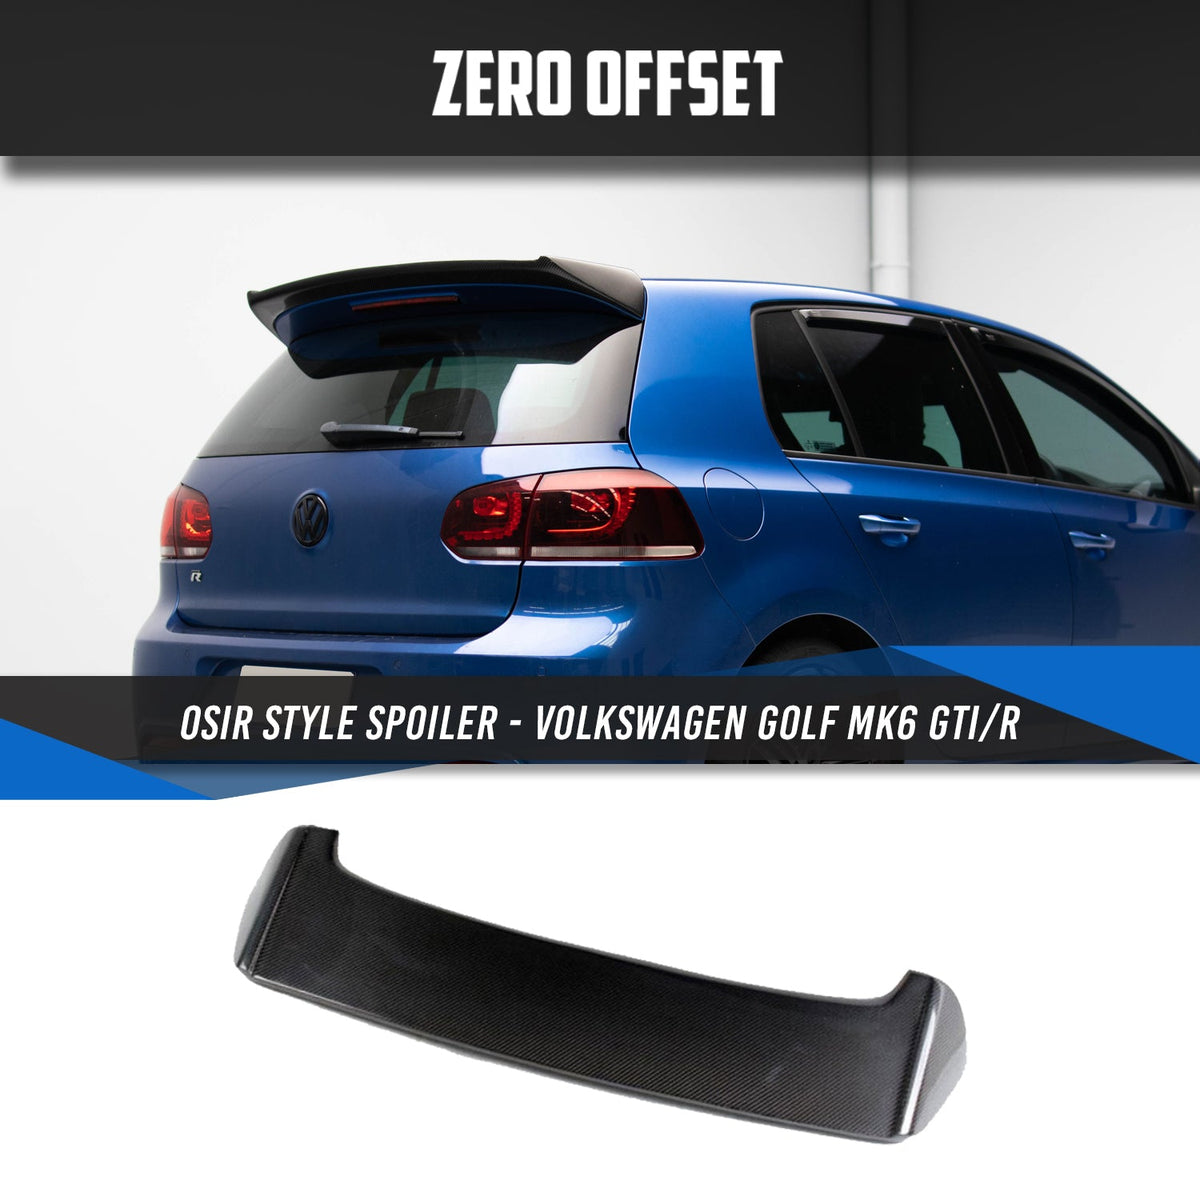 Zero Offset OSIR Style Spoiler for Volkswagen Golf MK6 GTI/R (Carbon Fibre)